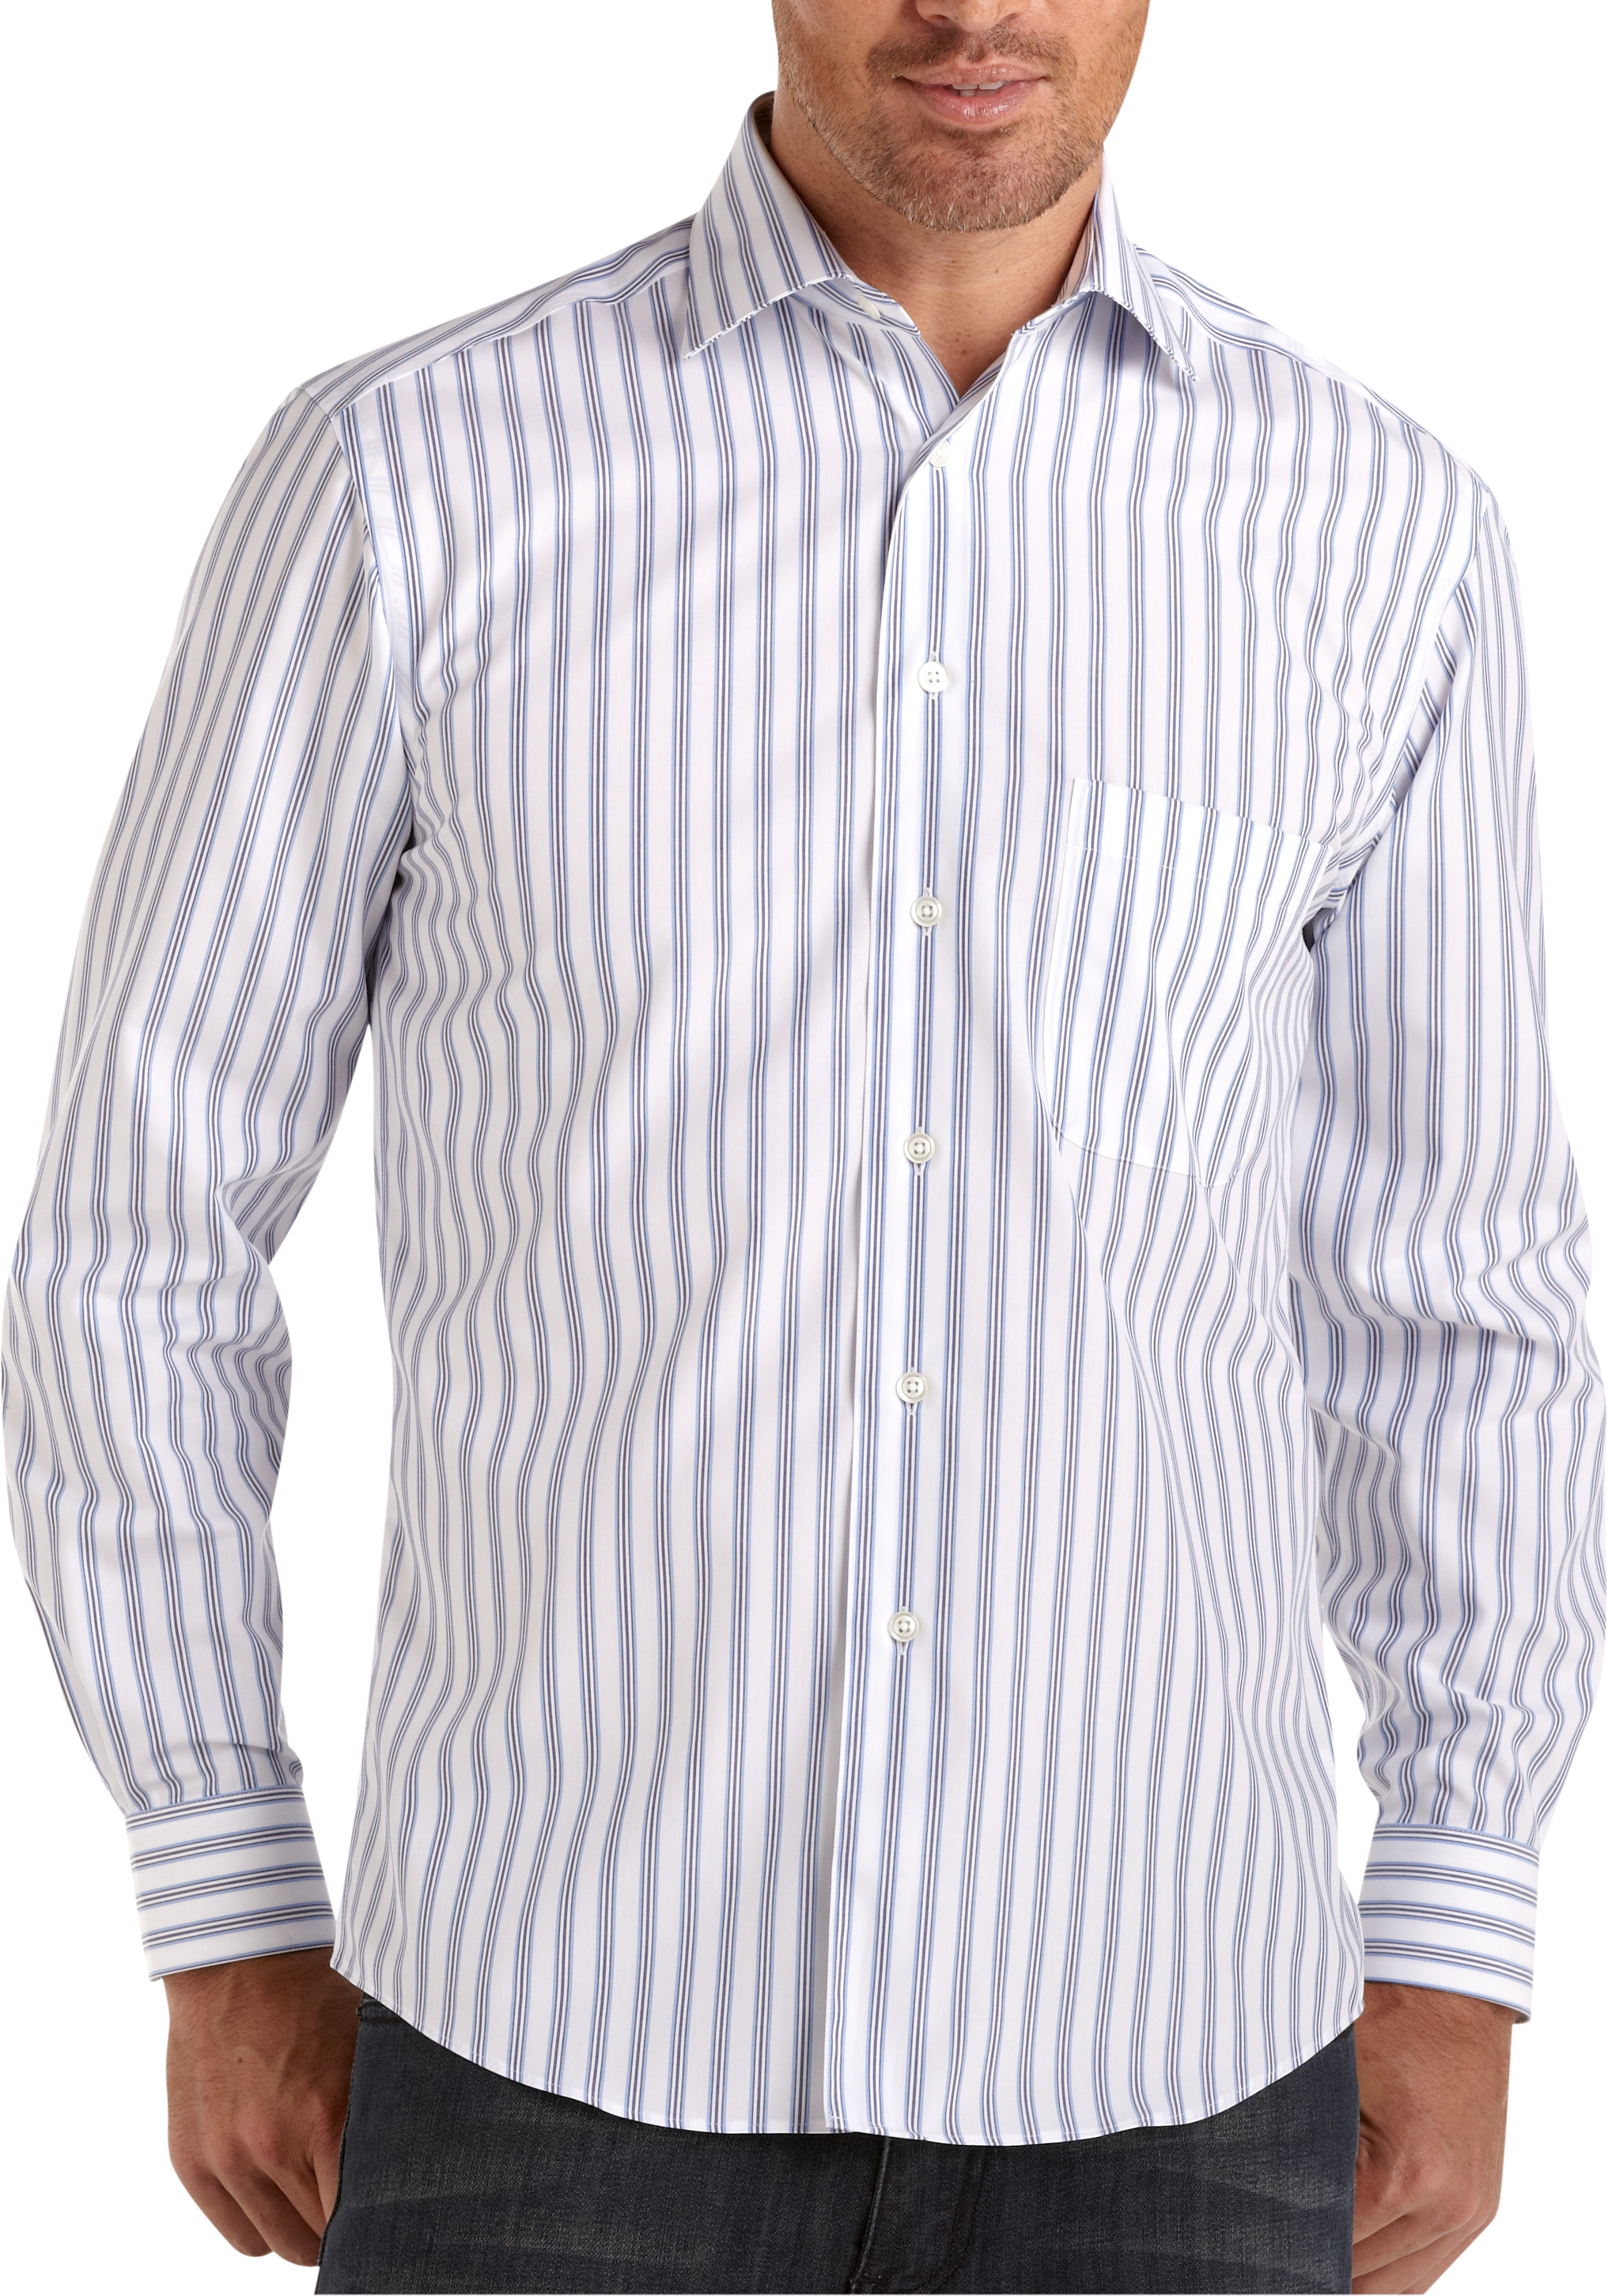 Pronto Uomo White and Blue Stripe Modern Fit Sport Shirt - Men's Sale ...